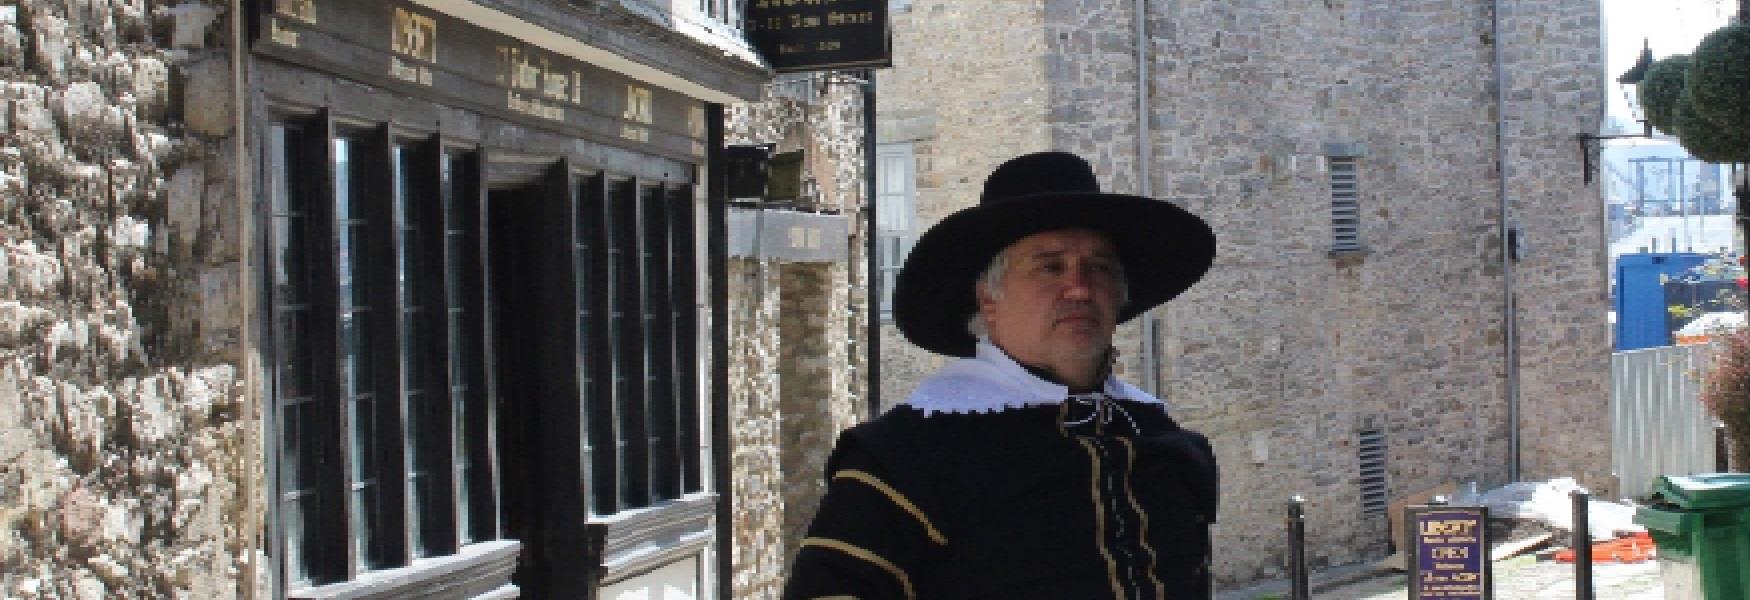 Man dressed as a pilgrim